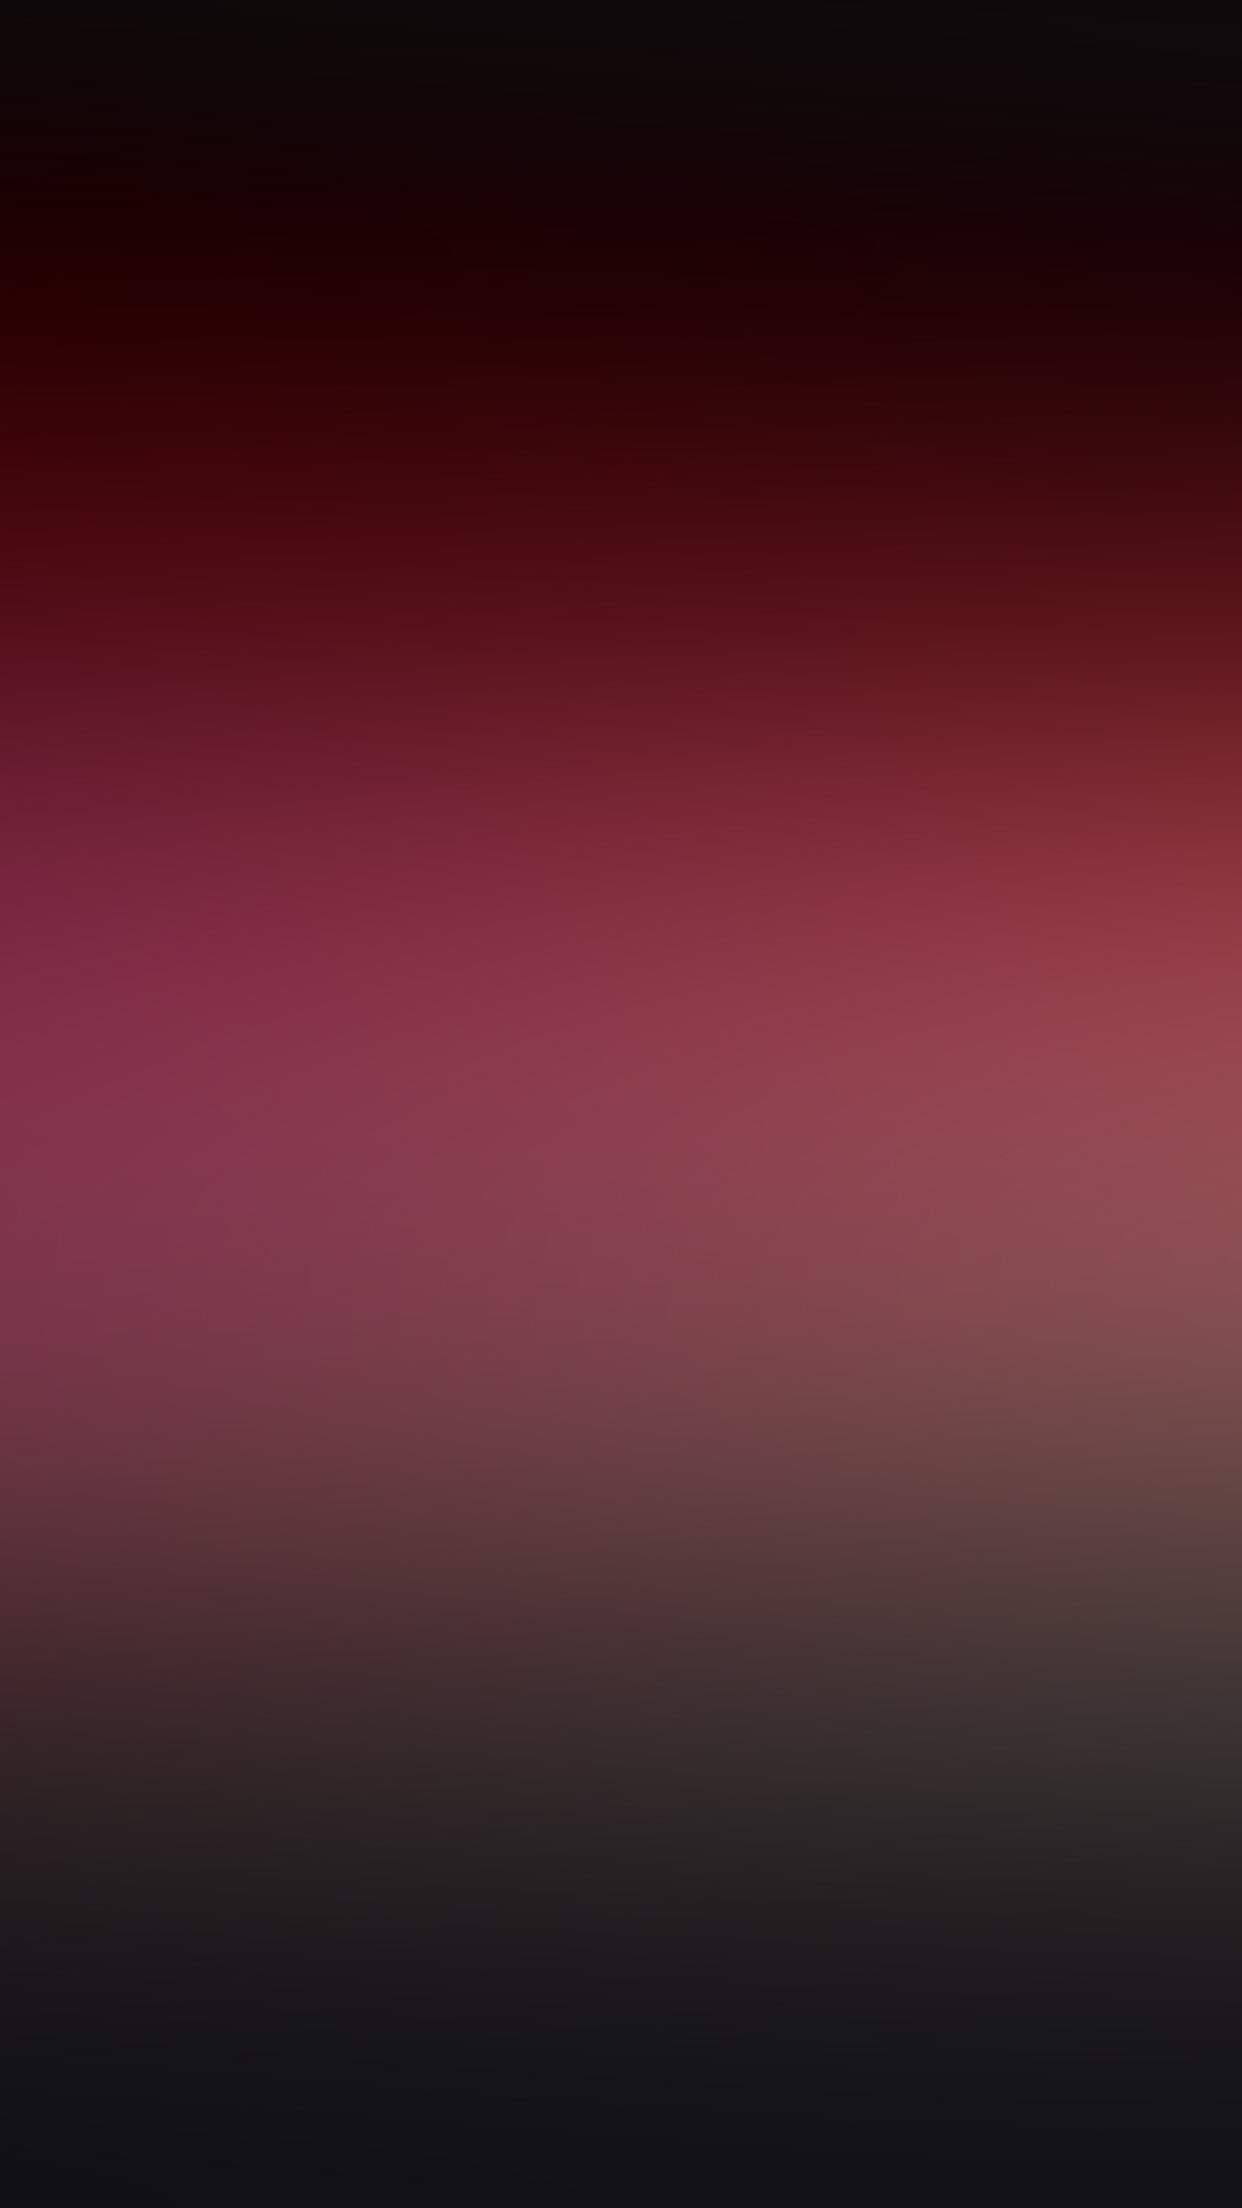 iPhone X wallpaper. red soft pastel gradation blur